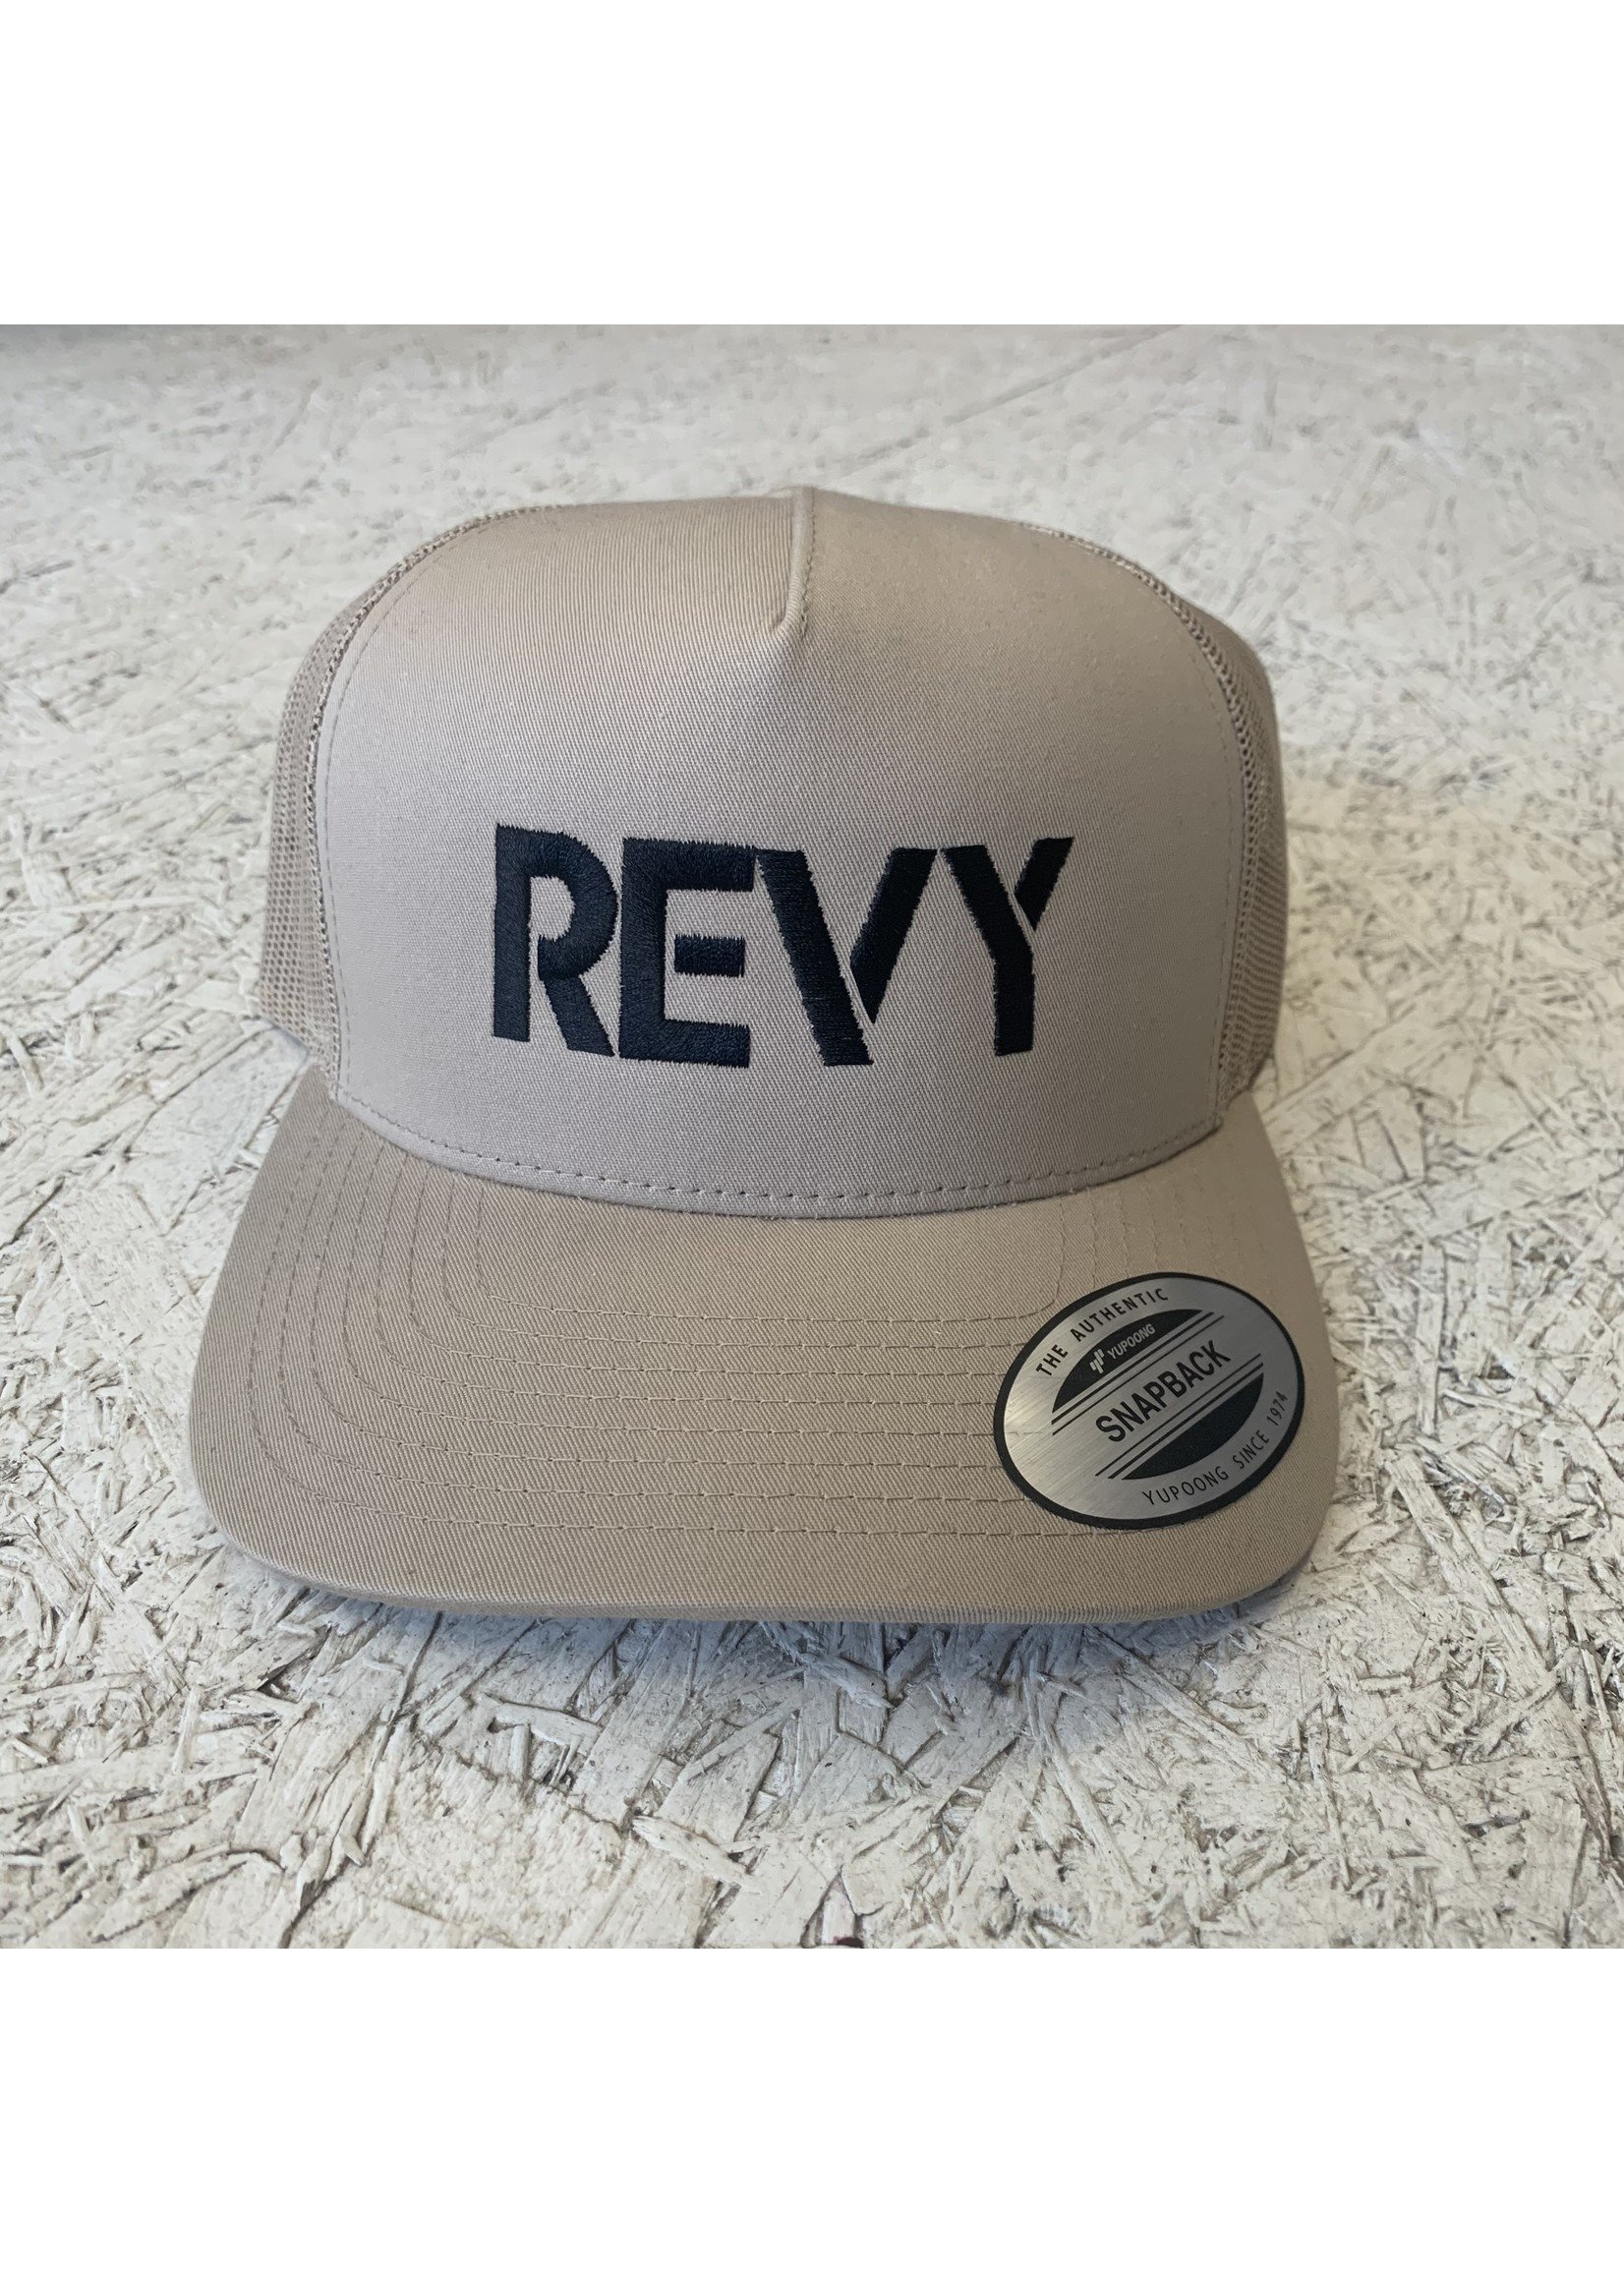 Integrated Apparel Revelstoke - REVY Stamp Curve Brim - Khaki